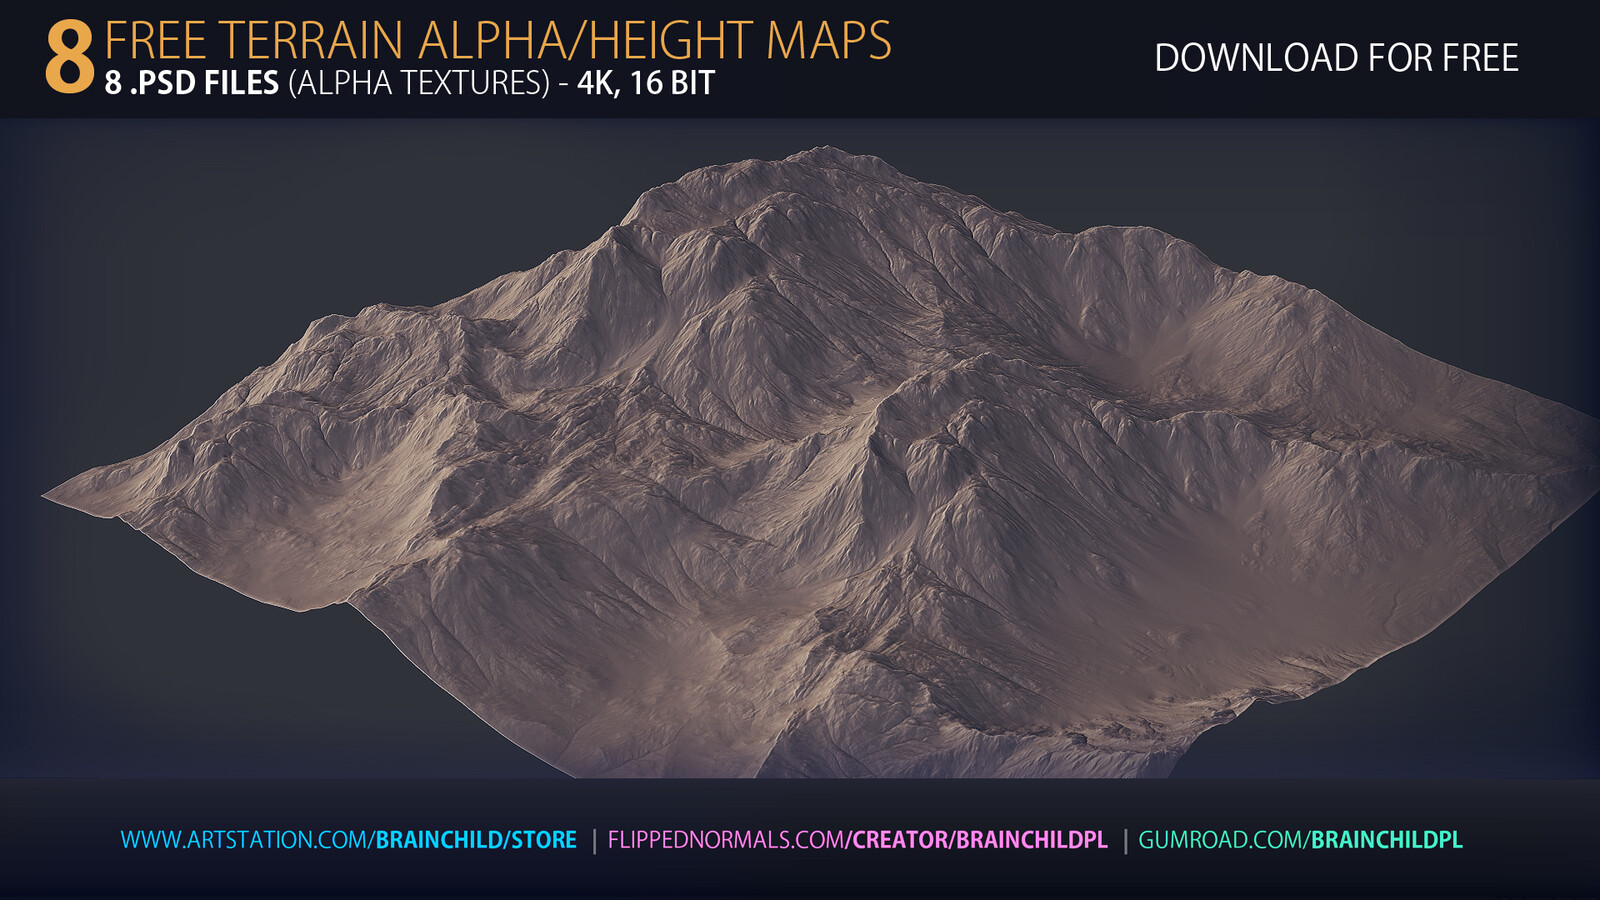 Download For Free https://www.artstation.com/brainchild/store | FREE - 8 Terrain Alpha Textures | Terrain Height Maps | 4k, 16bit